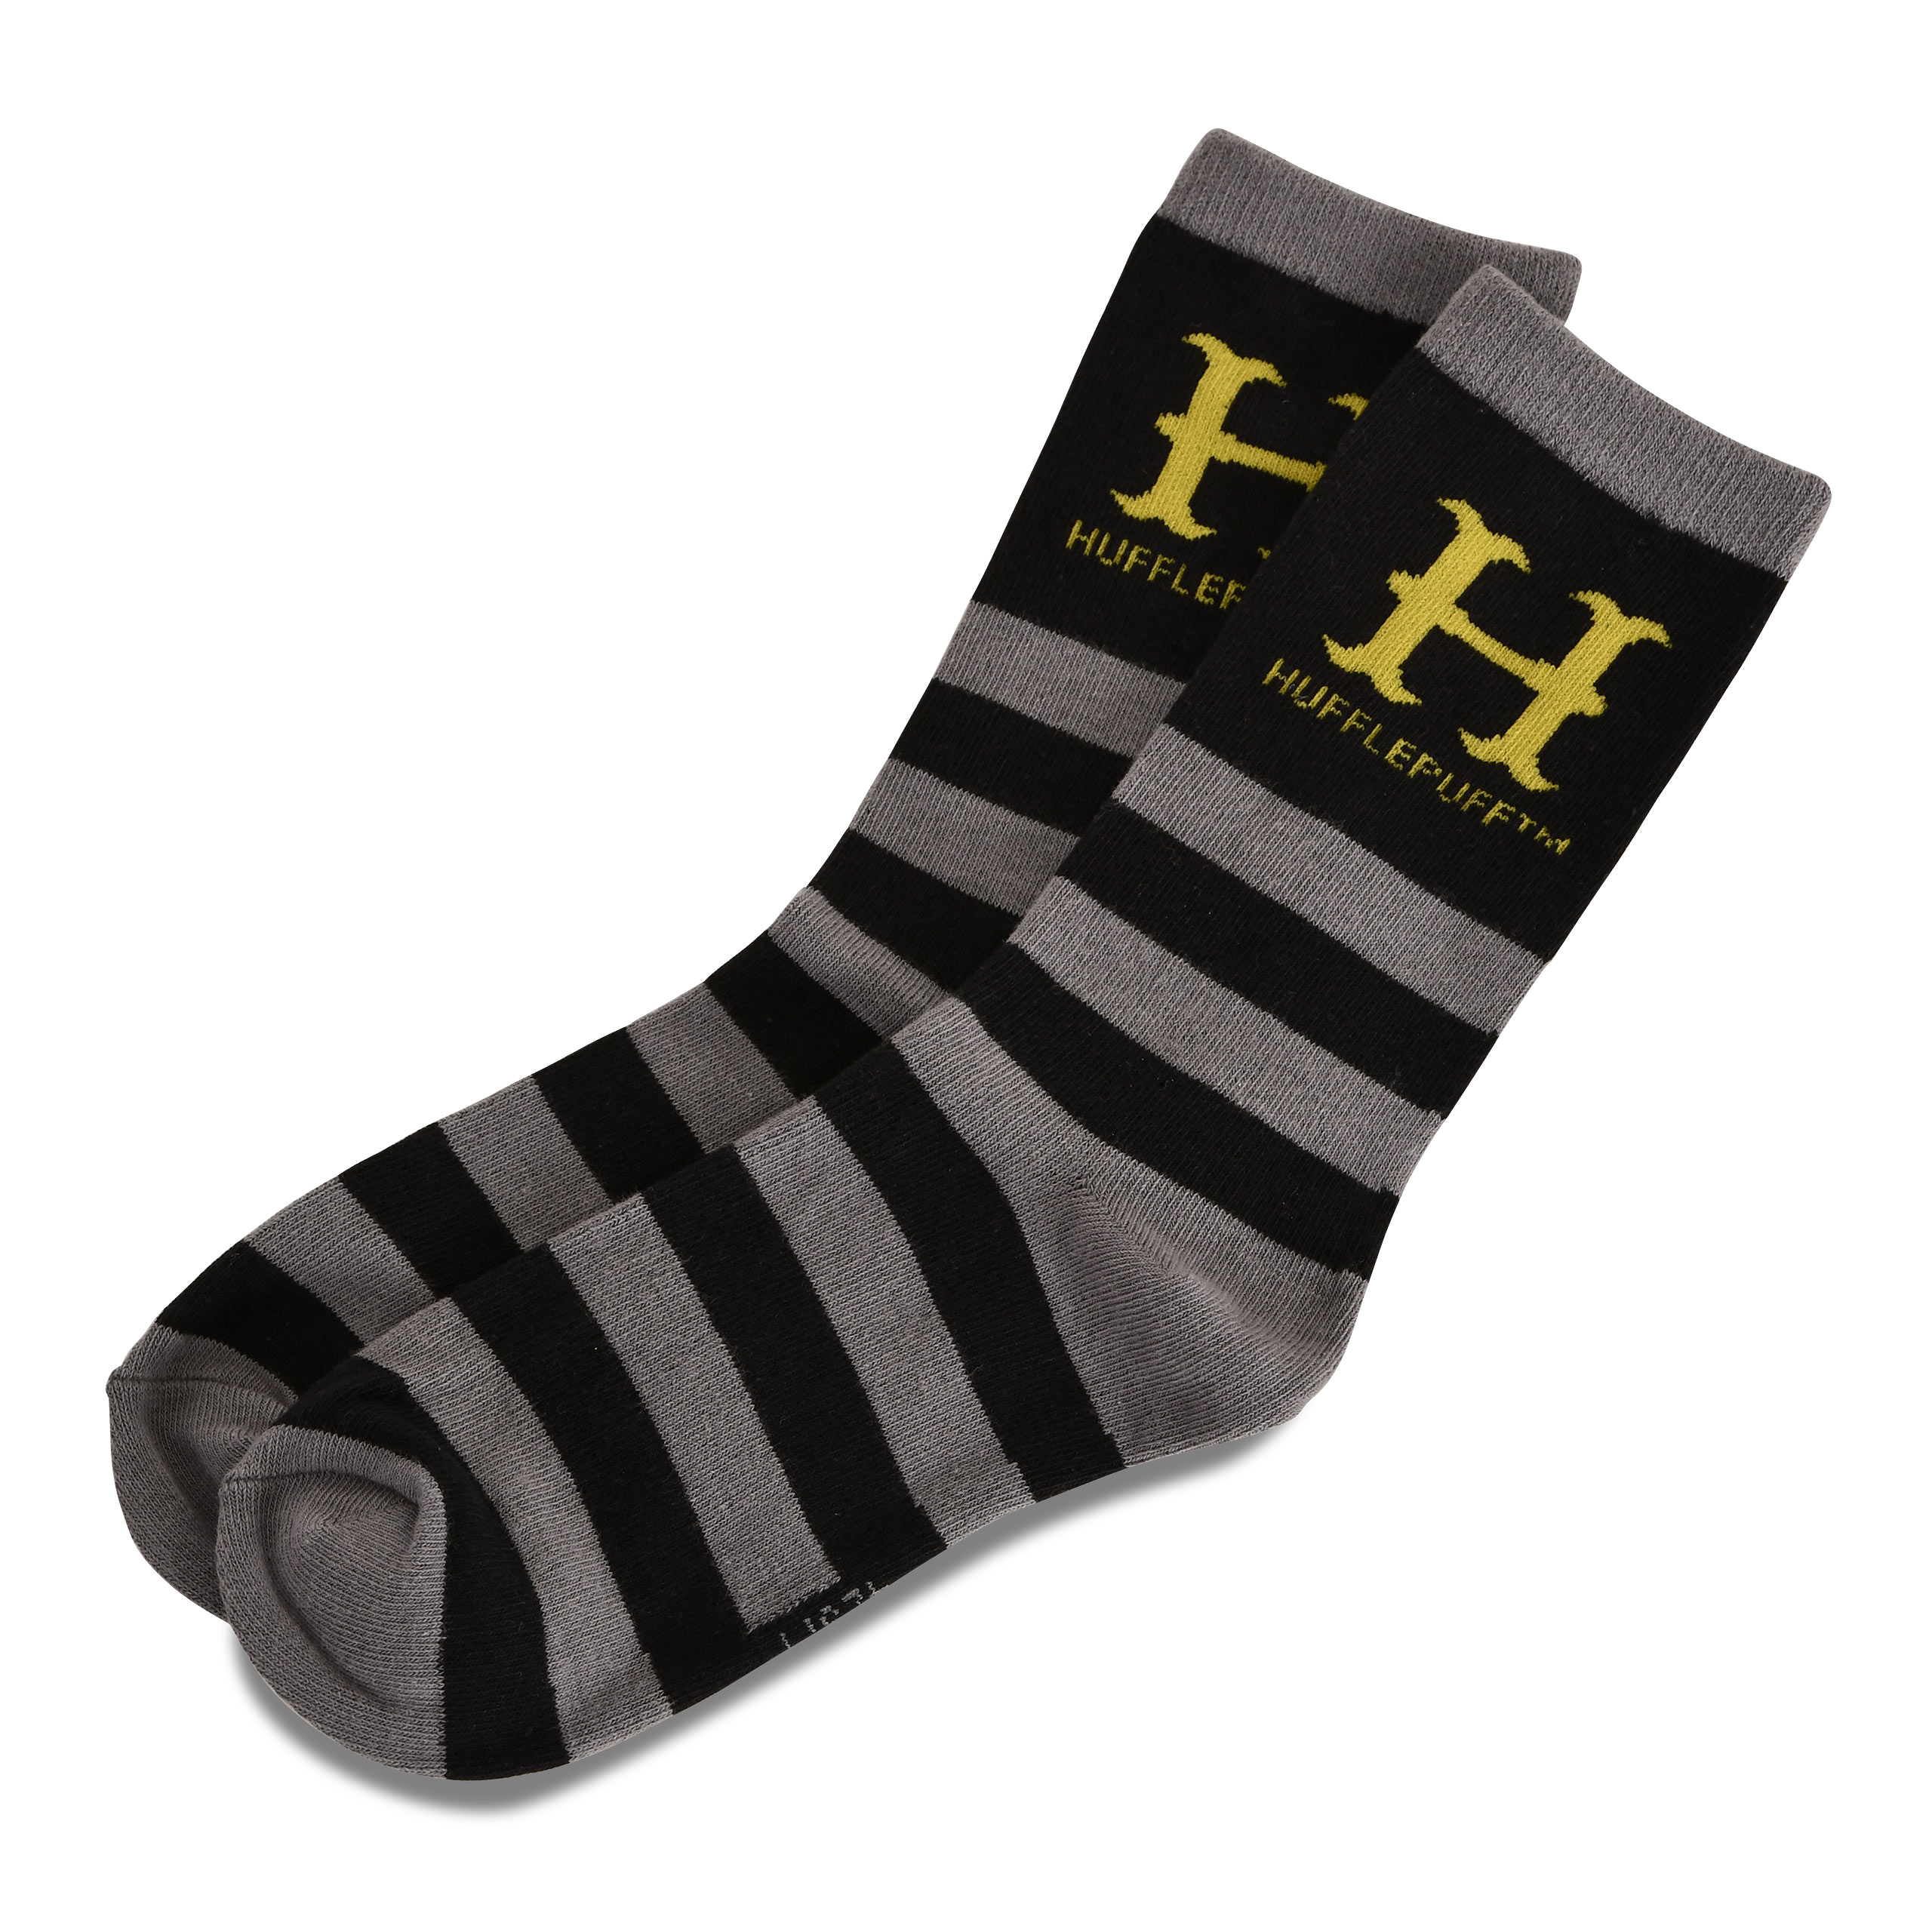 Harry Potter - Hufflepuff Socken schwarz-grau